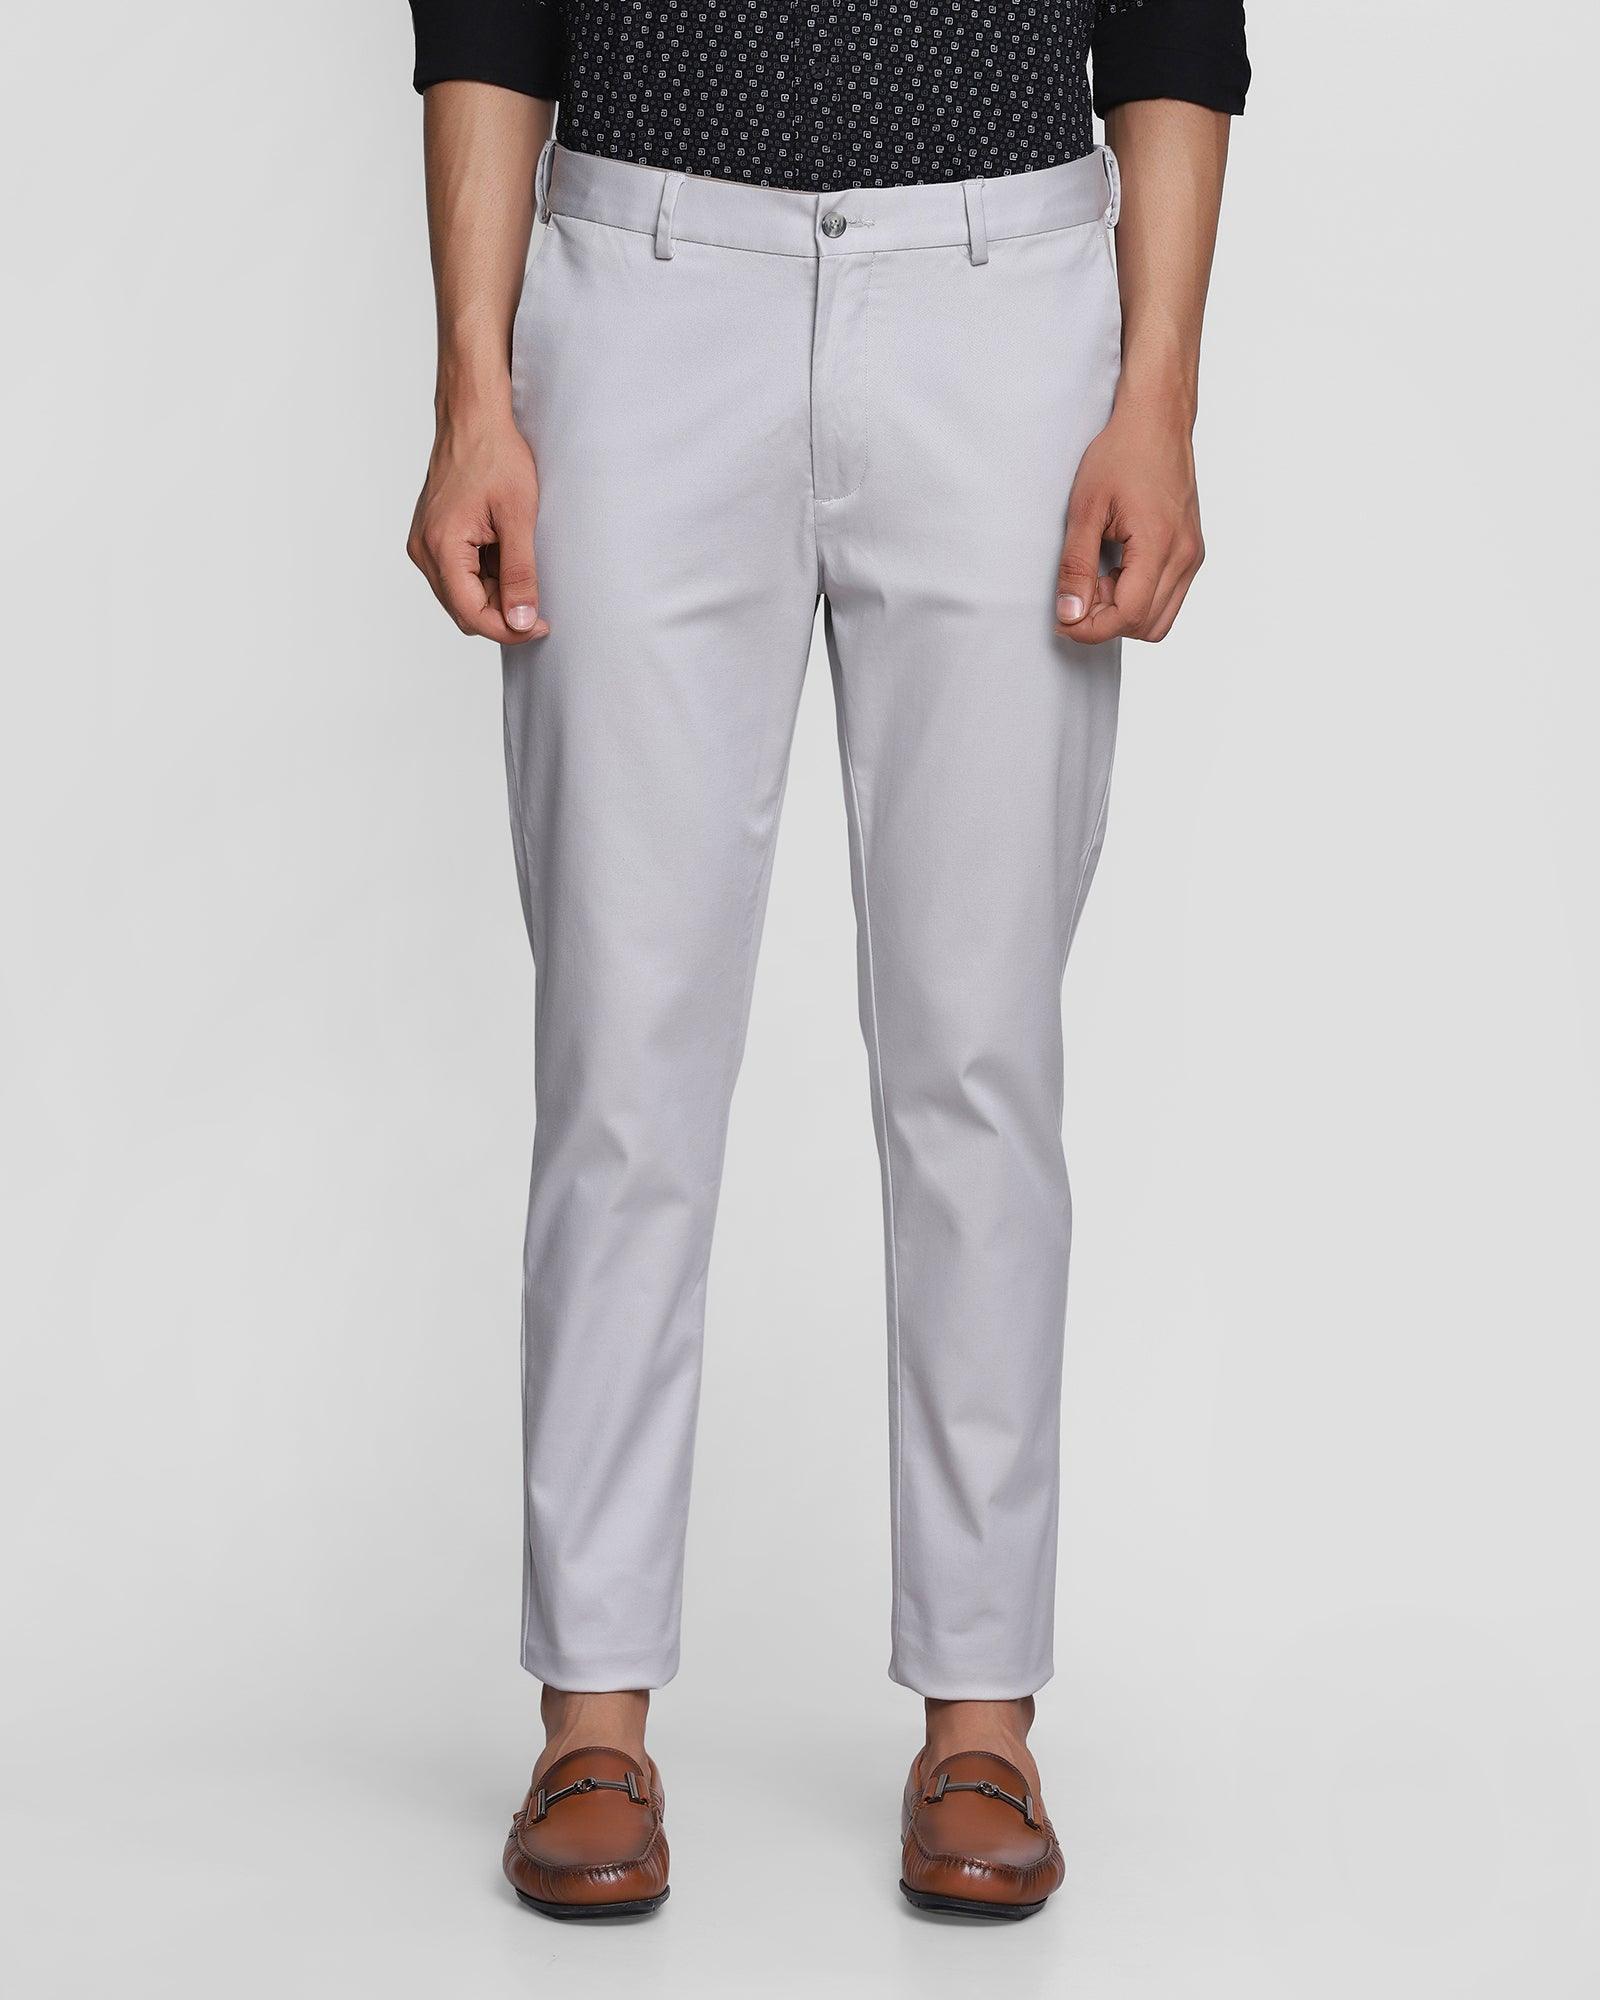 comfort arise casual grey solid khakis - earl